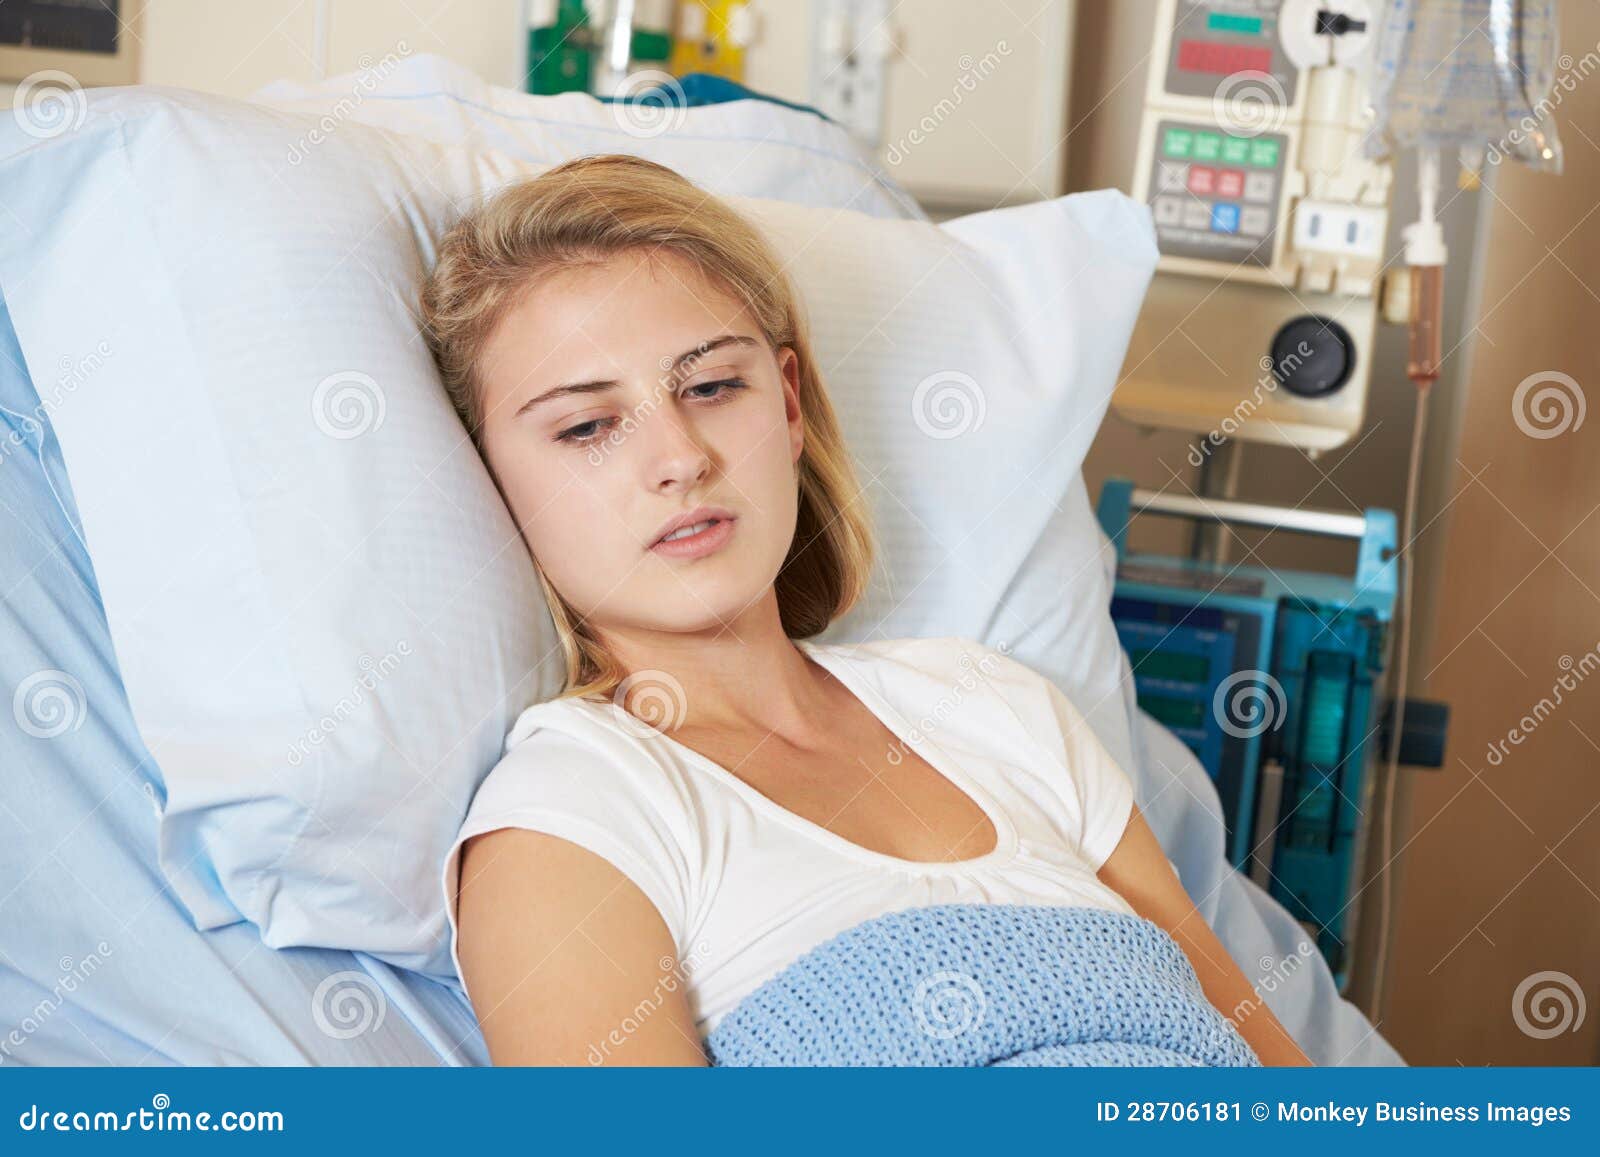 depressed teenage female patient lying in hospital bed